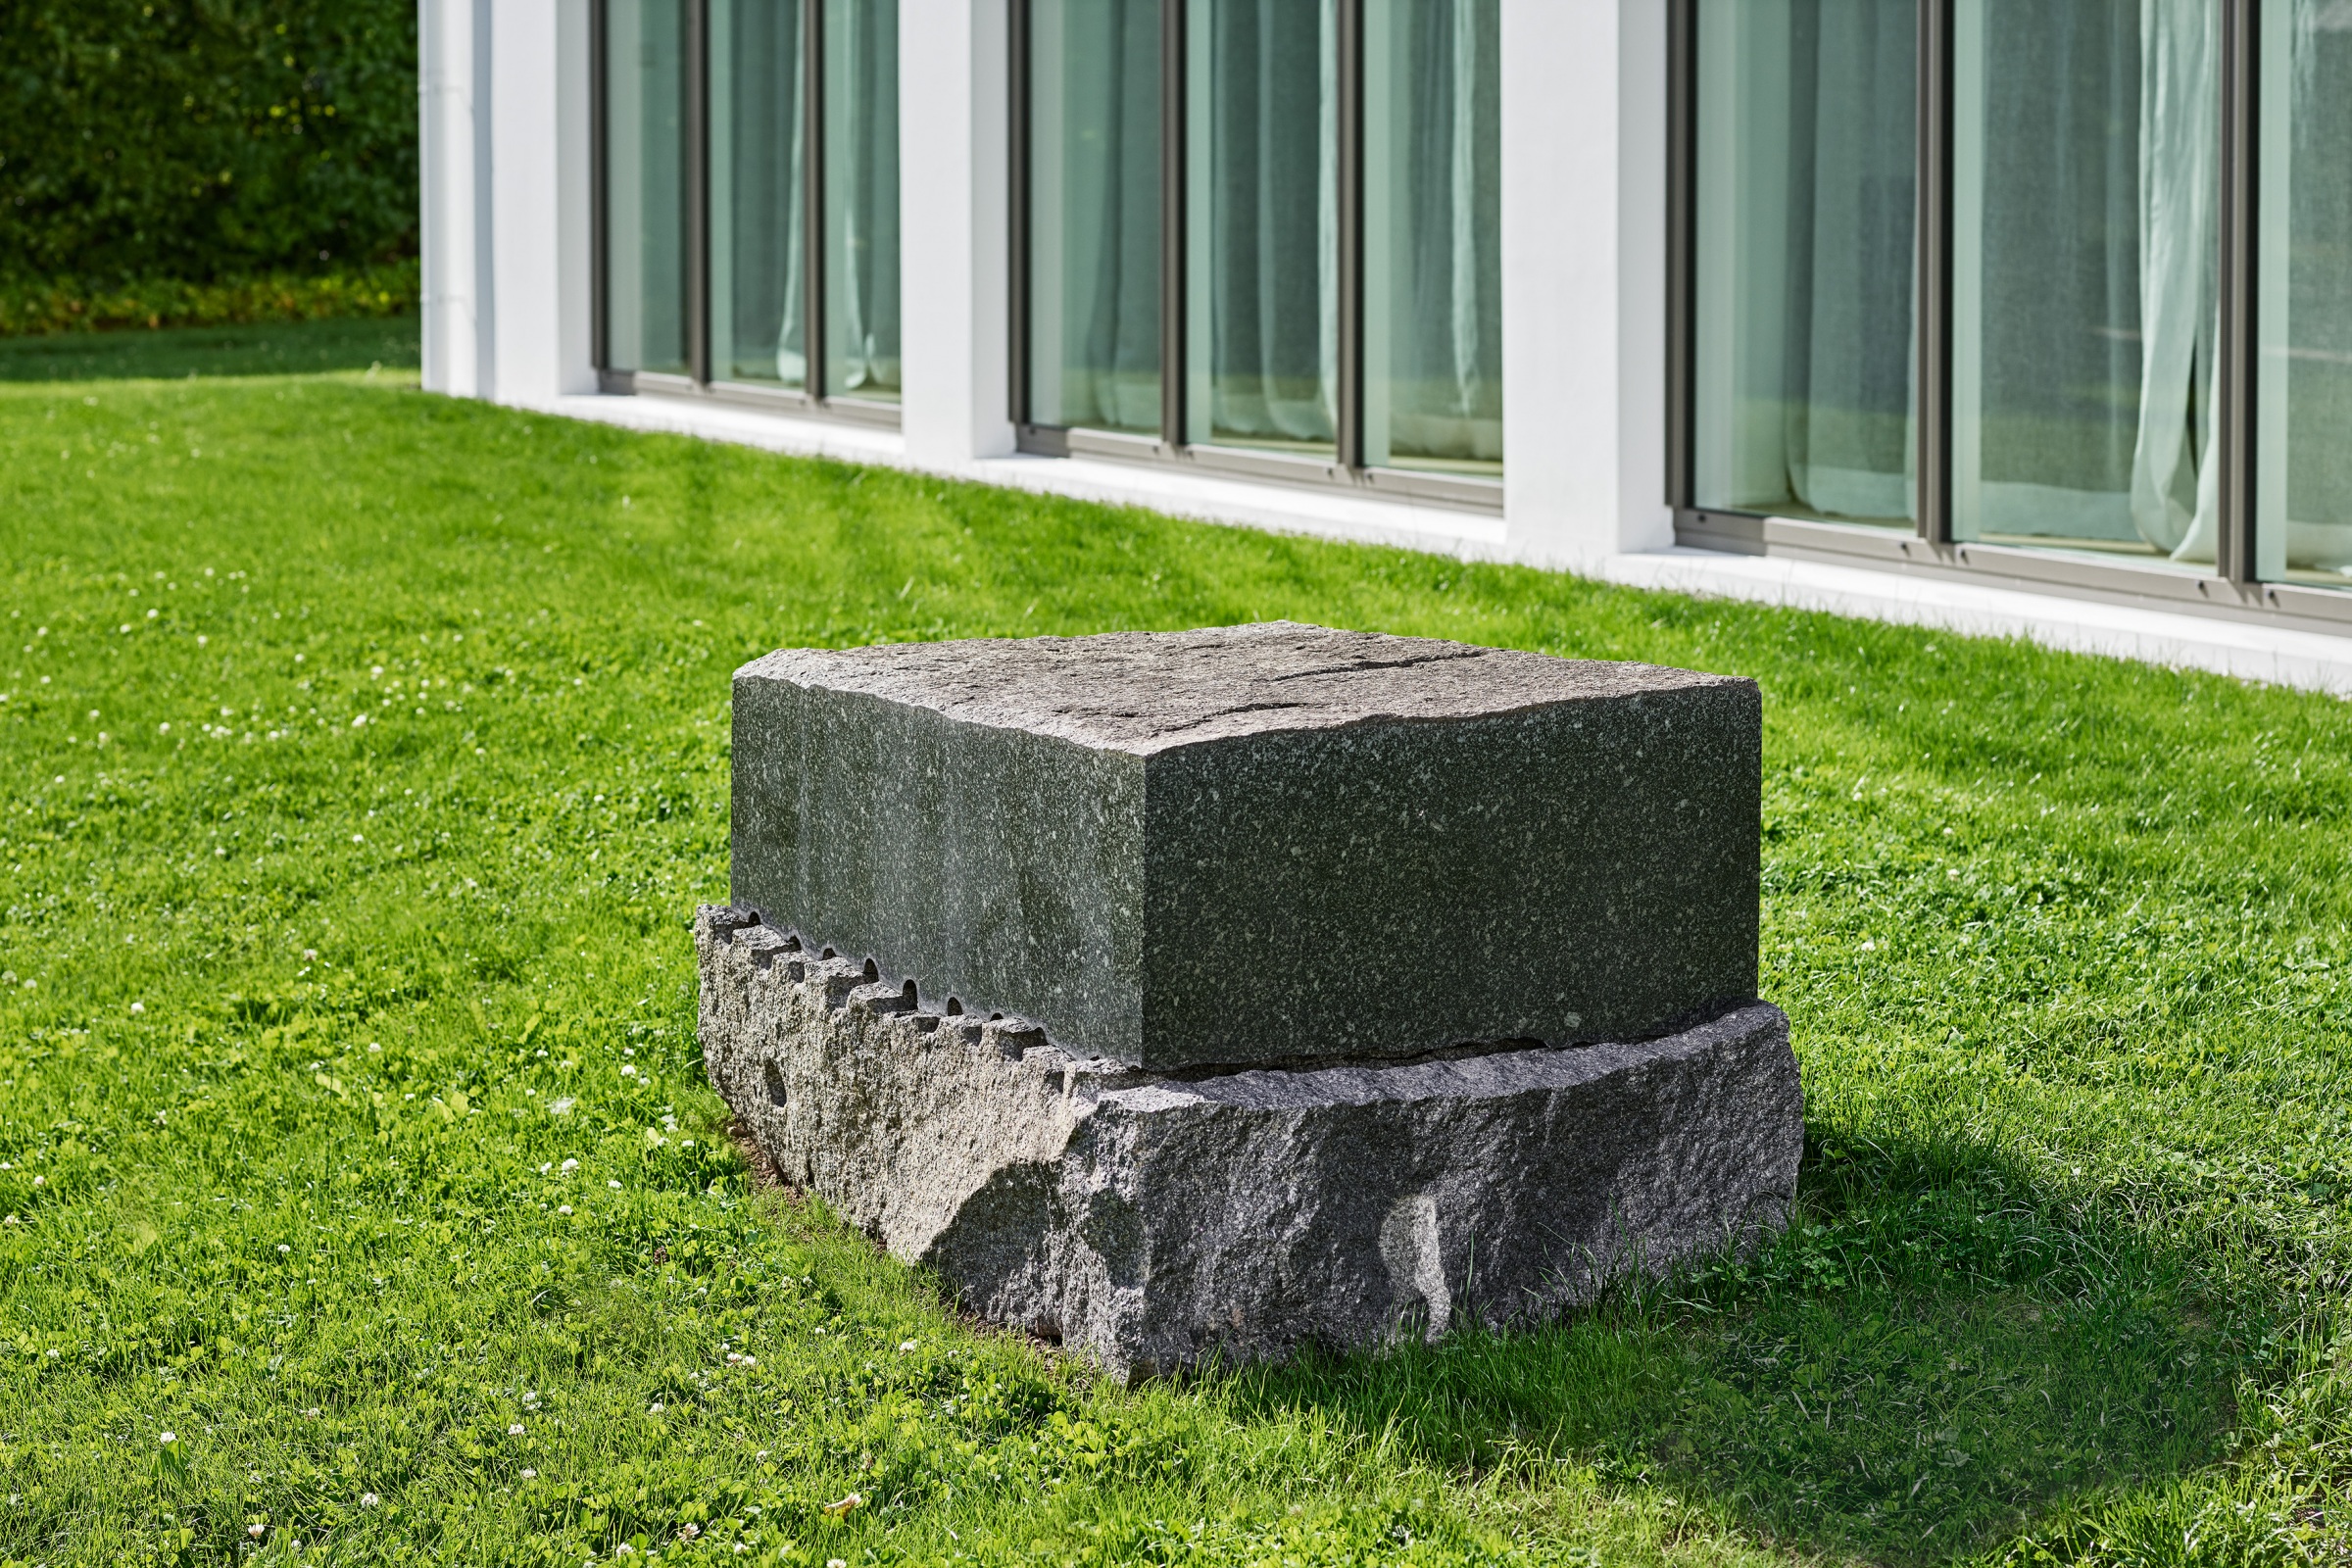 Ulrich Rückriem, Gebhardser Granit, 1988, granite, 68 x 113 x 82 cm.; 26 3/4 x 44 1/2 x 32 1/4 in.